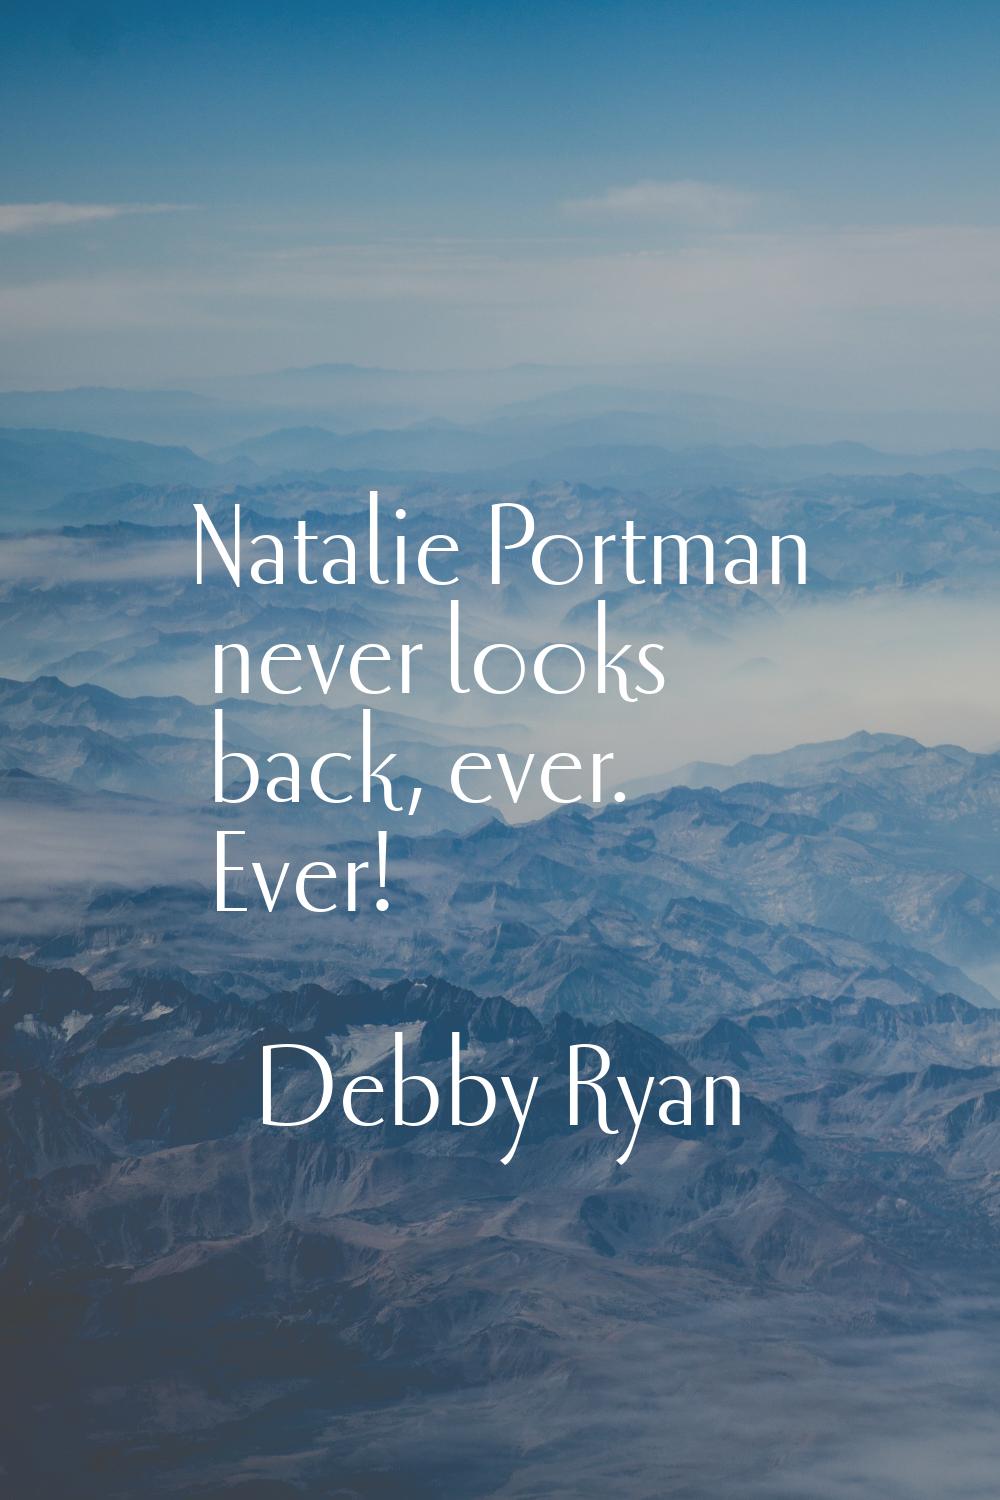 Natalie Portman never looks back, ever. Ever!